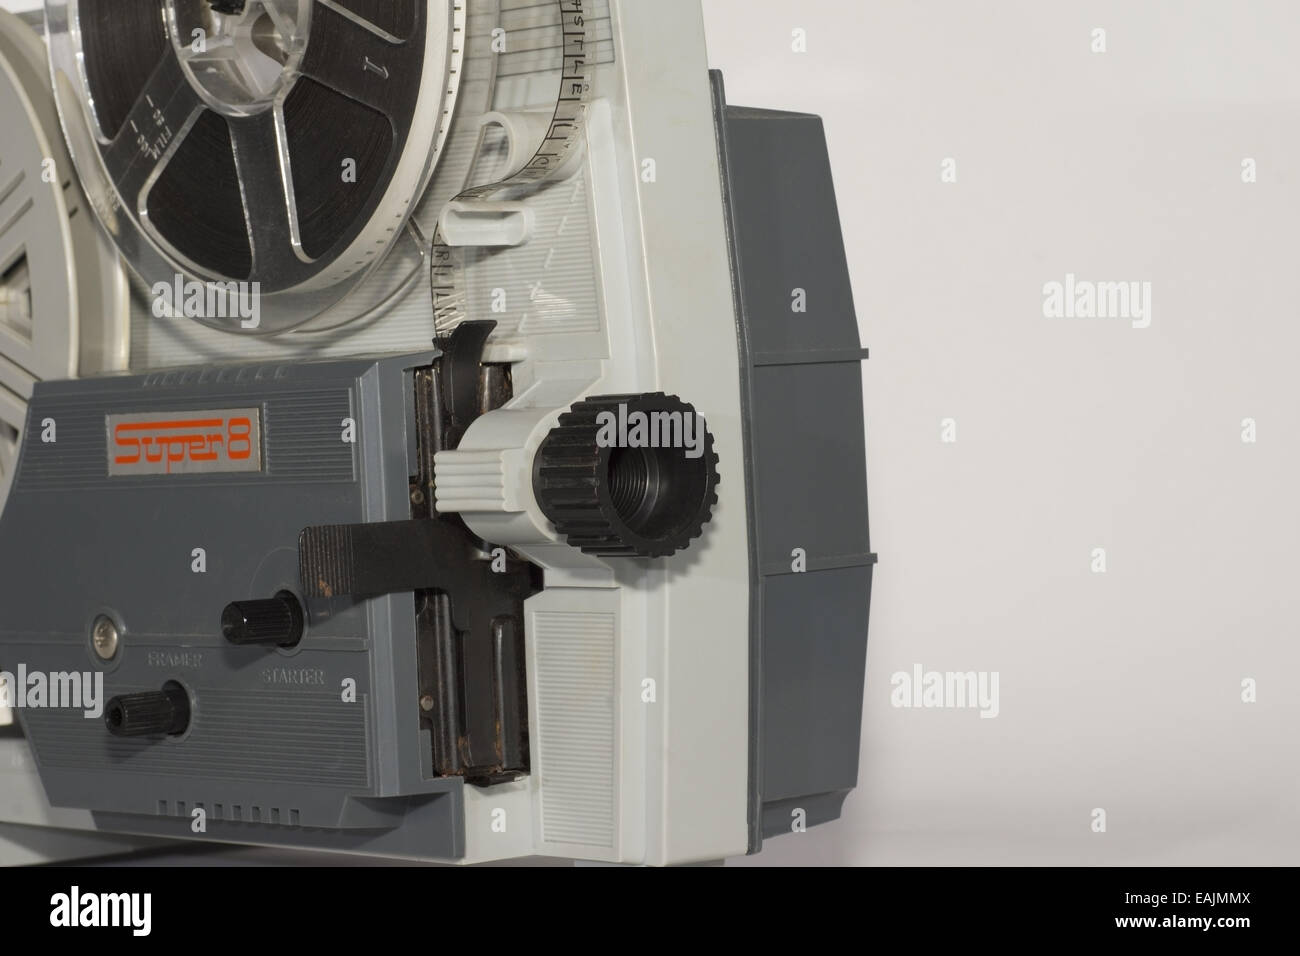 A Gioca Royal Milano Super 8mm automatic cine projector Stock Photo